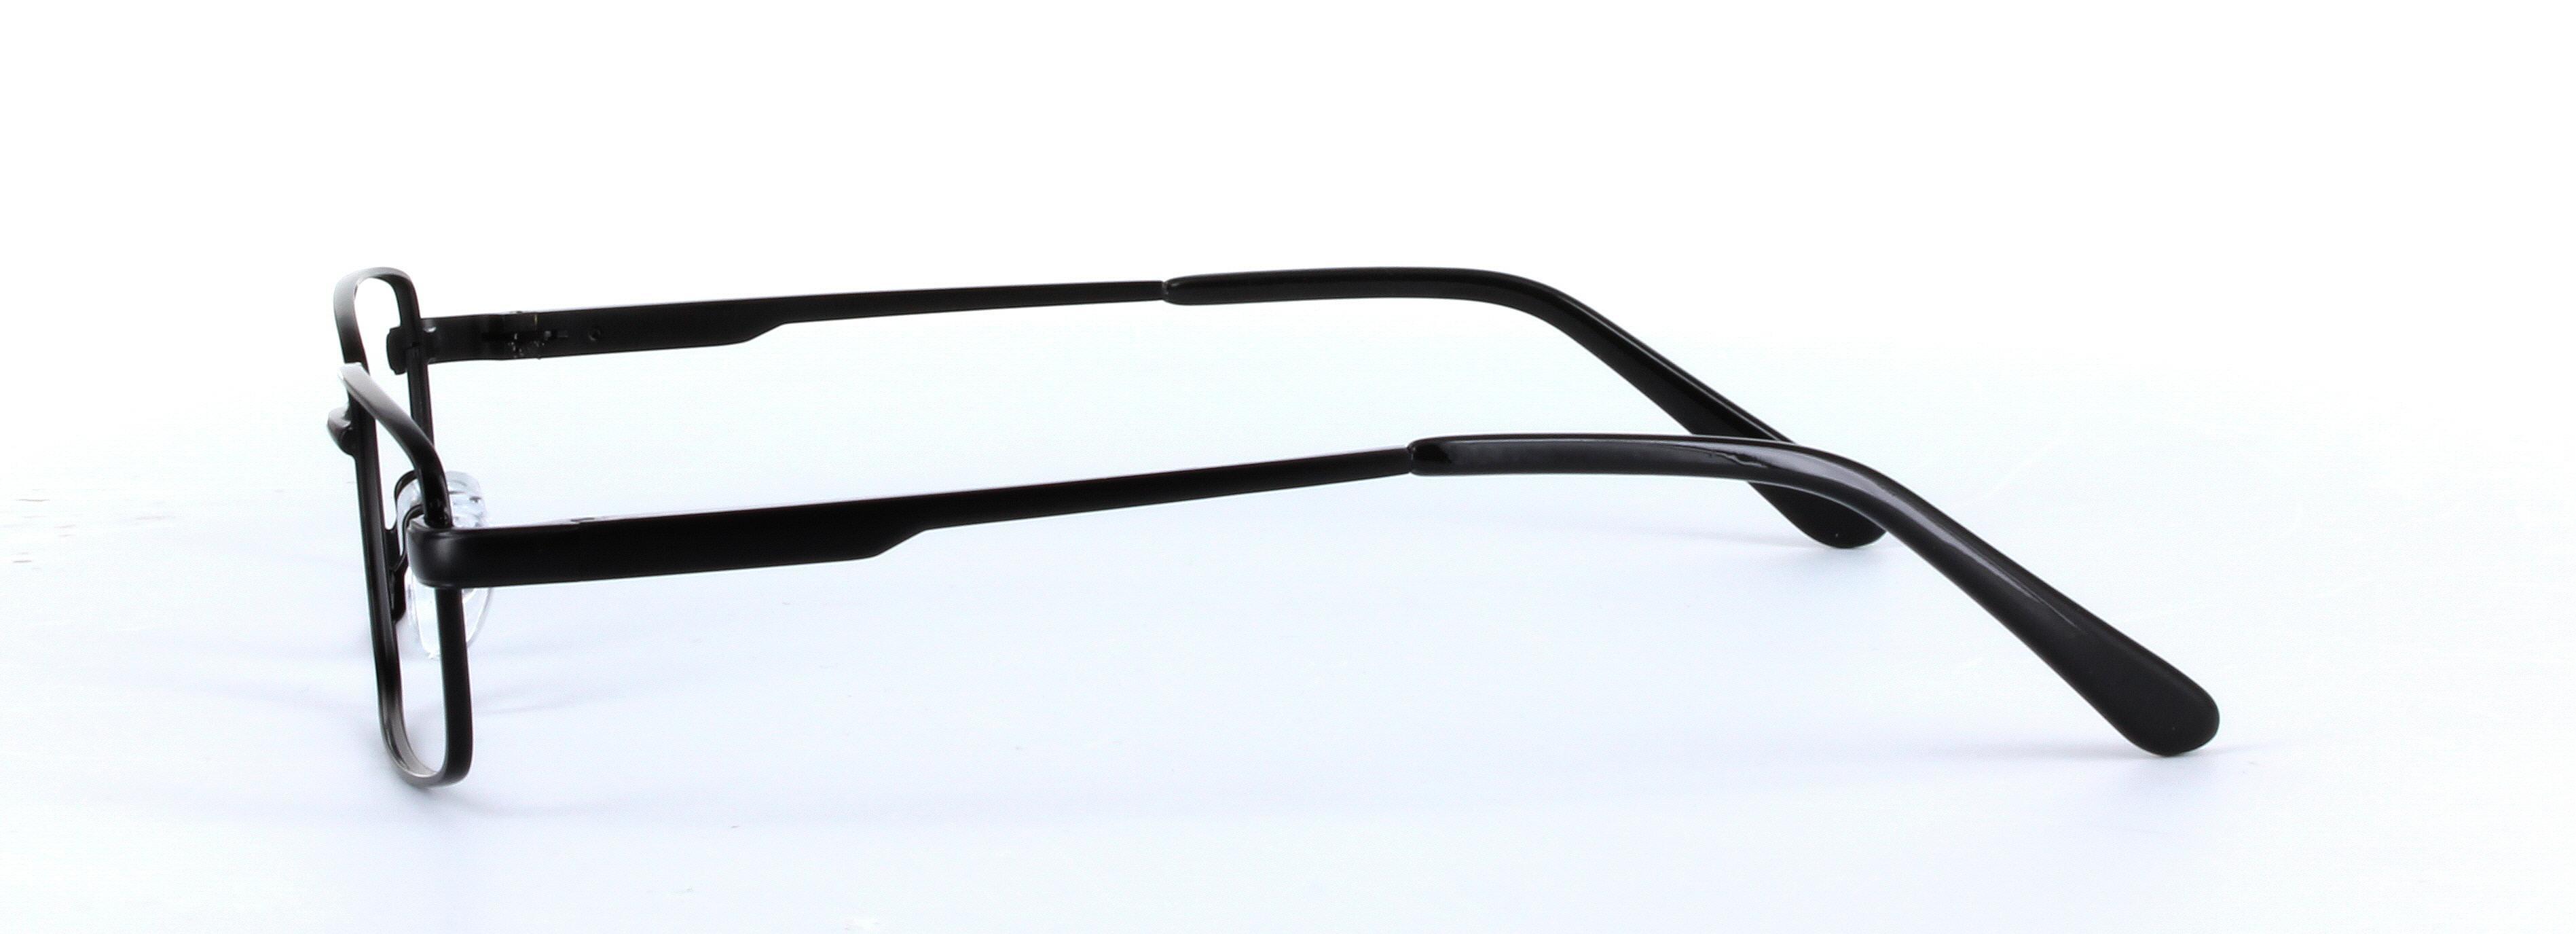 Kriston Black Full Rim Rectangular Metal Glasses - Image View 2